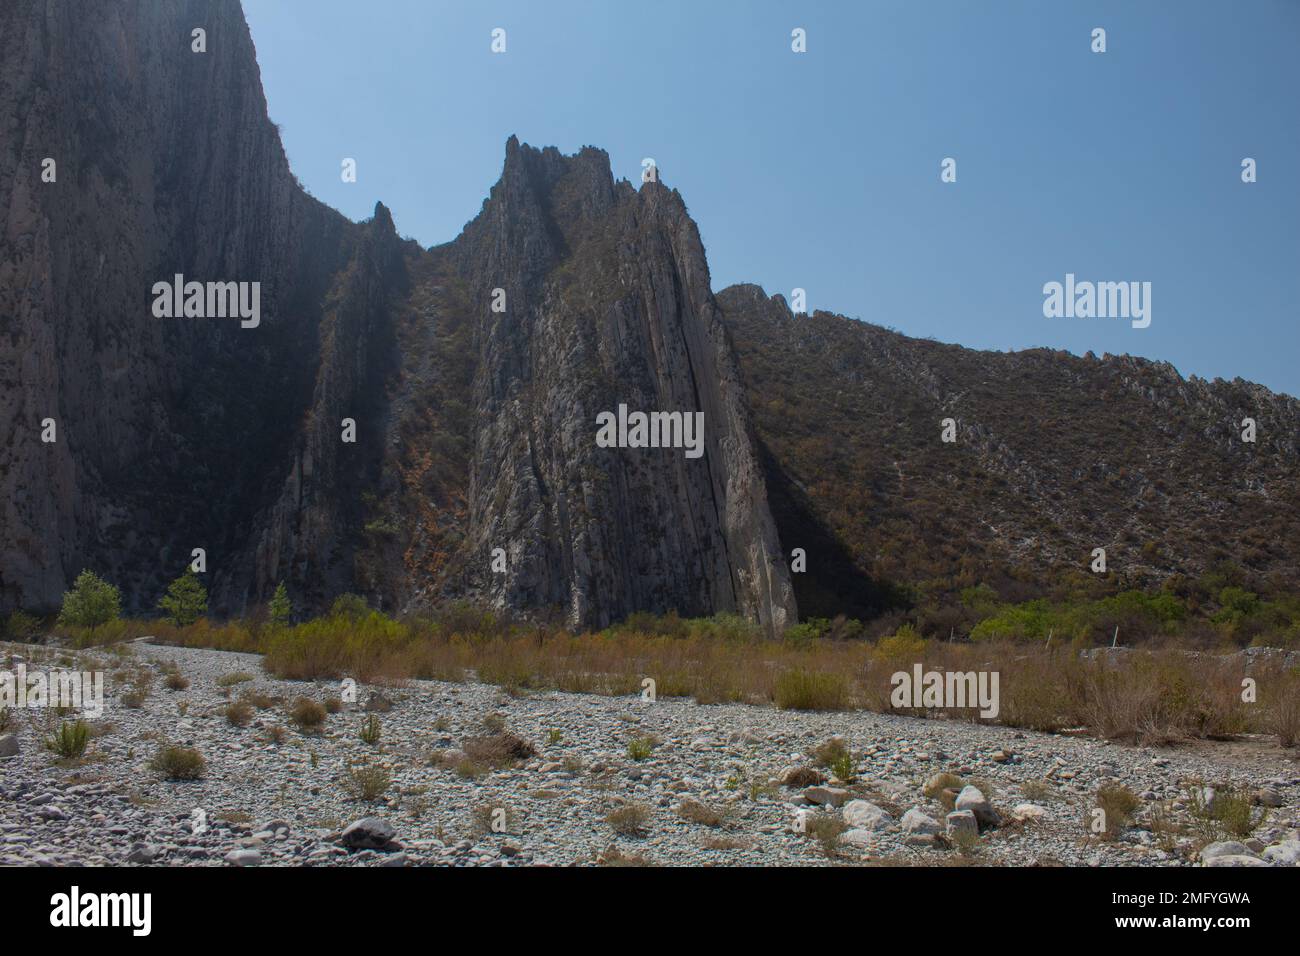 La Huasteca National Park, Monterrey, Nuevo León, Mexico View of the Park, blue sky and rocky mountains Stock Photo